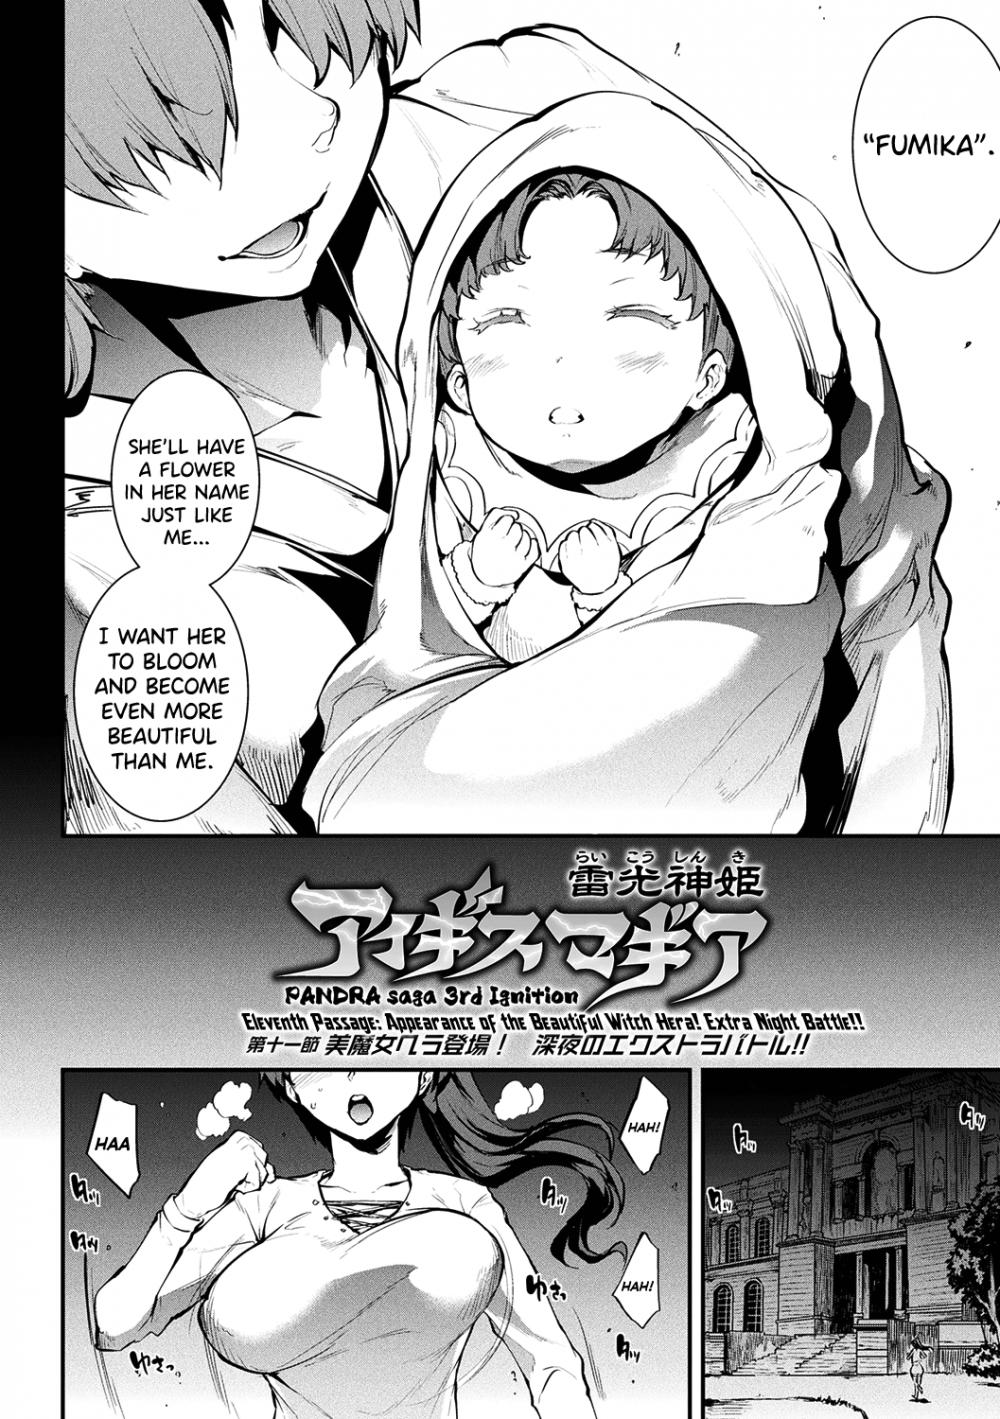 Hentai Manga Comic-Raikou Shinki Igis Magia II -PANDRA saga 3rd ignition--Chapter 4-2